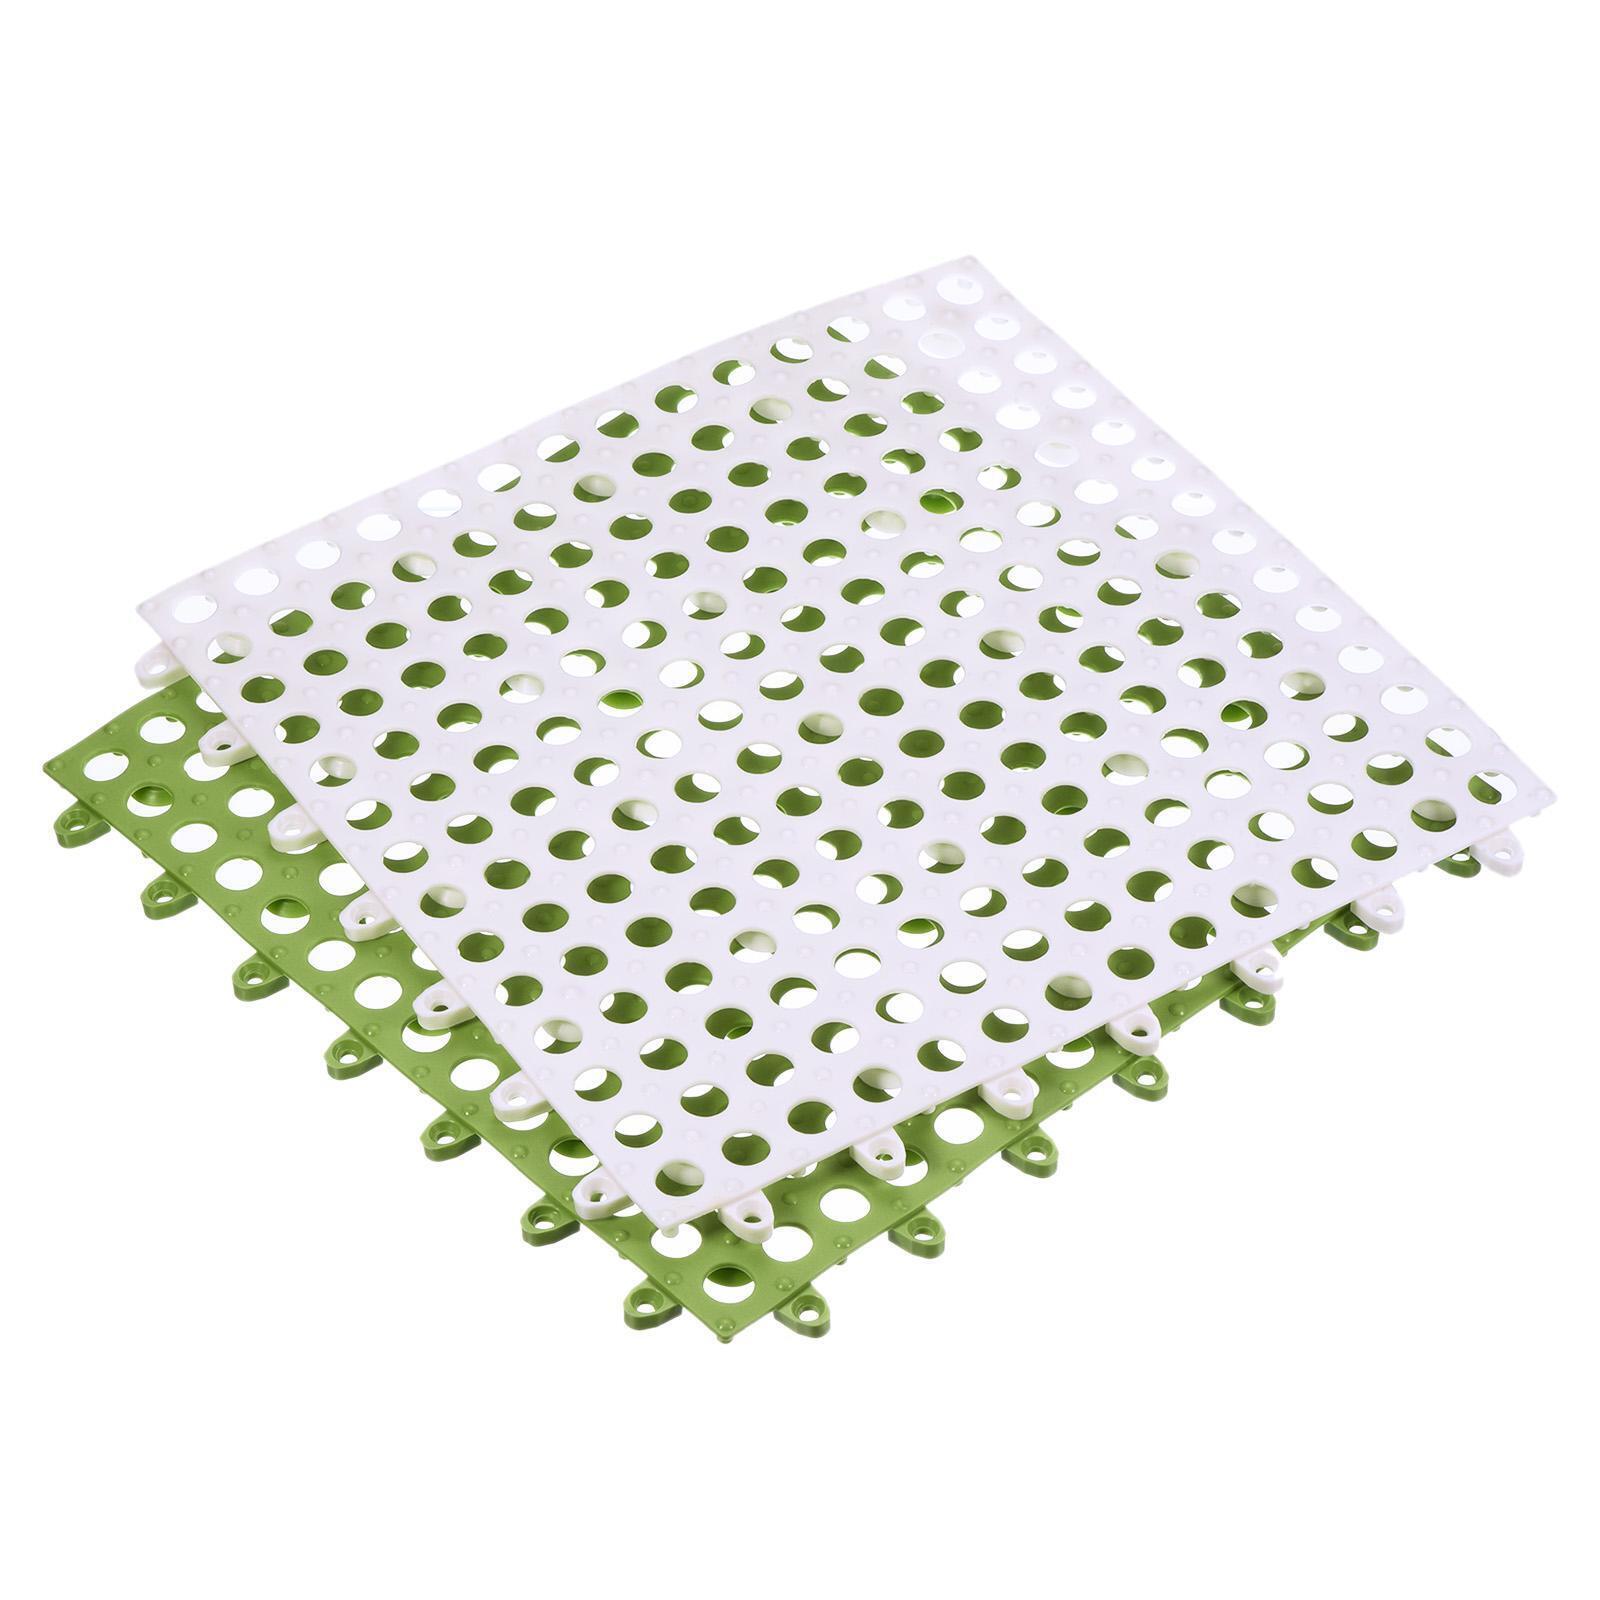 4pcs Interlocking Cushion 11.8" Plastic Green+white Drain Mat With Suction Cups